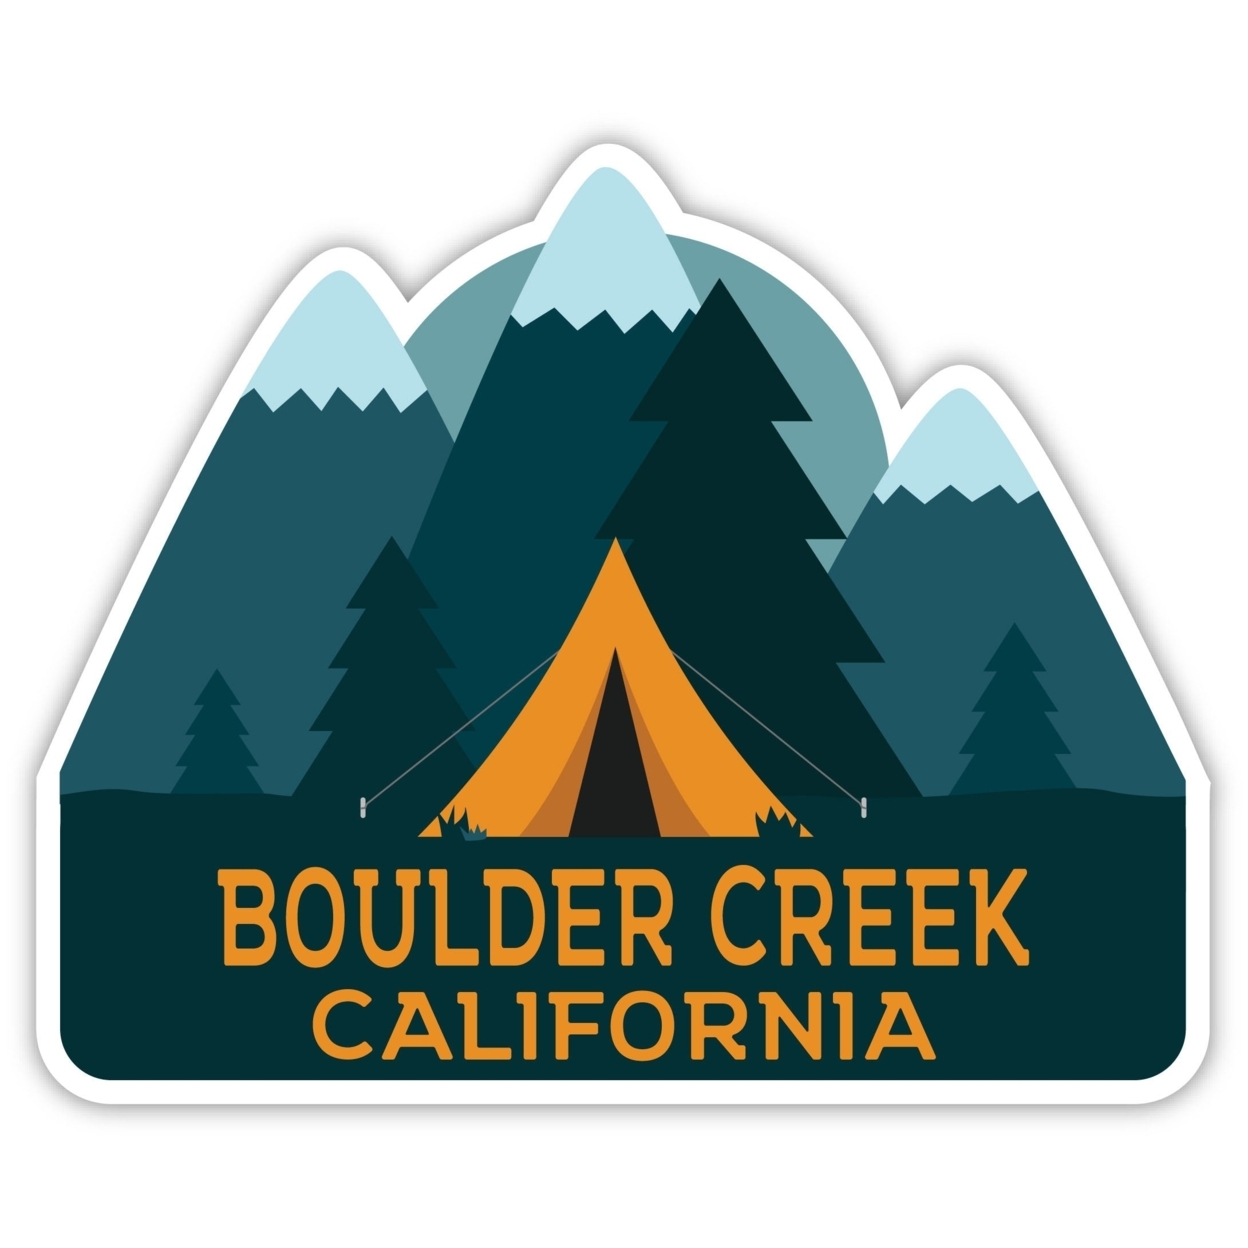 Boulder Creek California Souvenir Decorative Stickers (Choose Theme And Size) - 4-Pack, 4-Inch, Tent